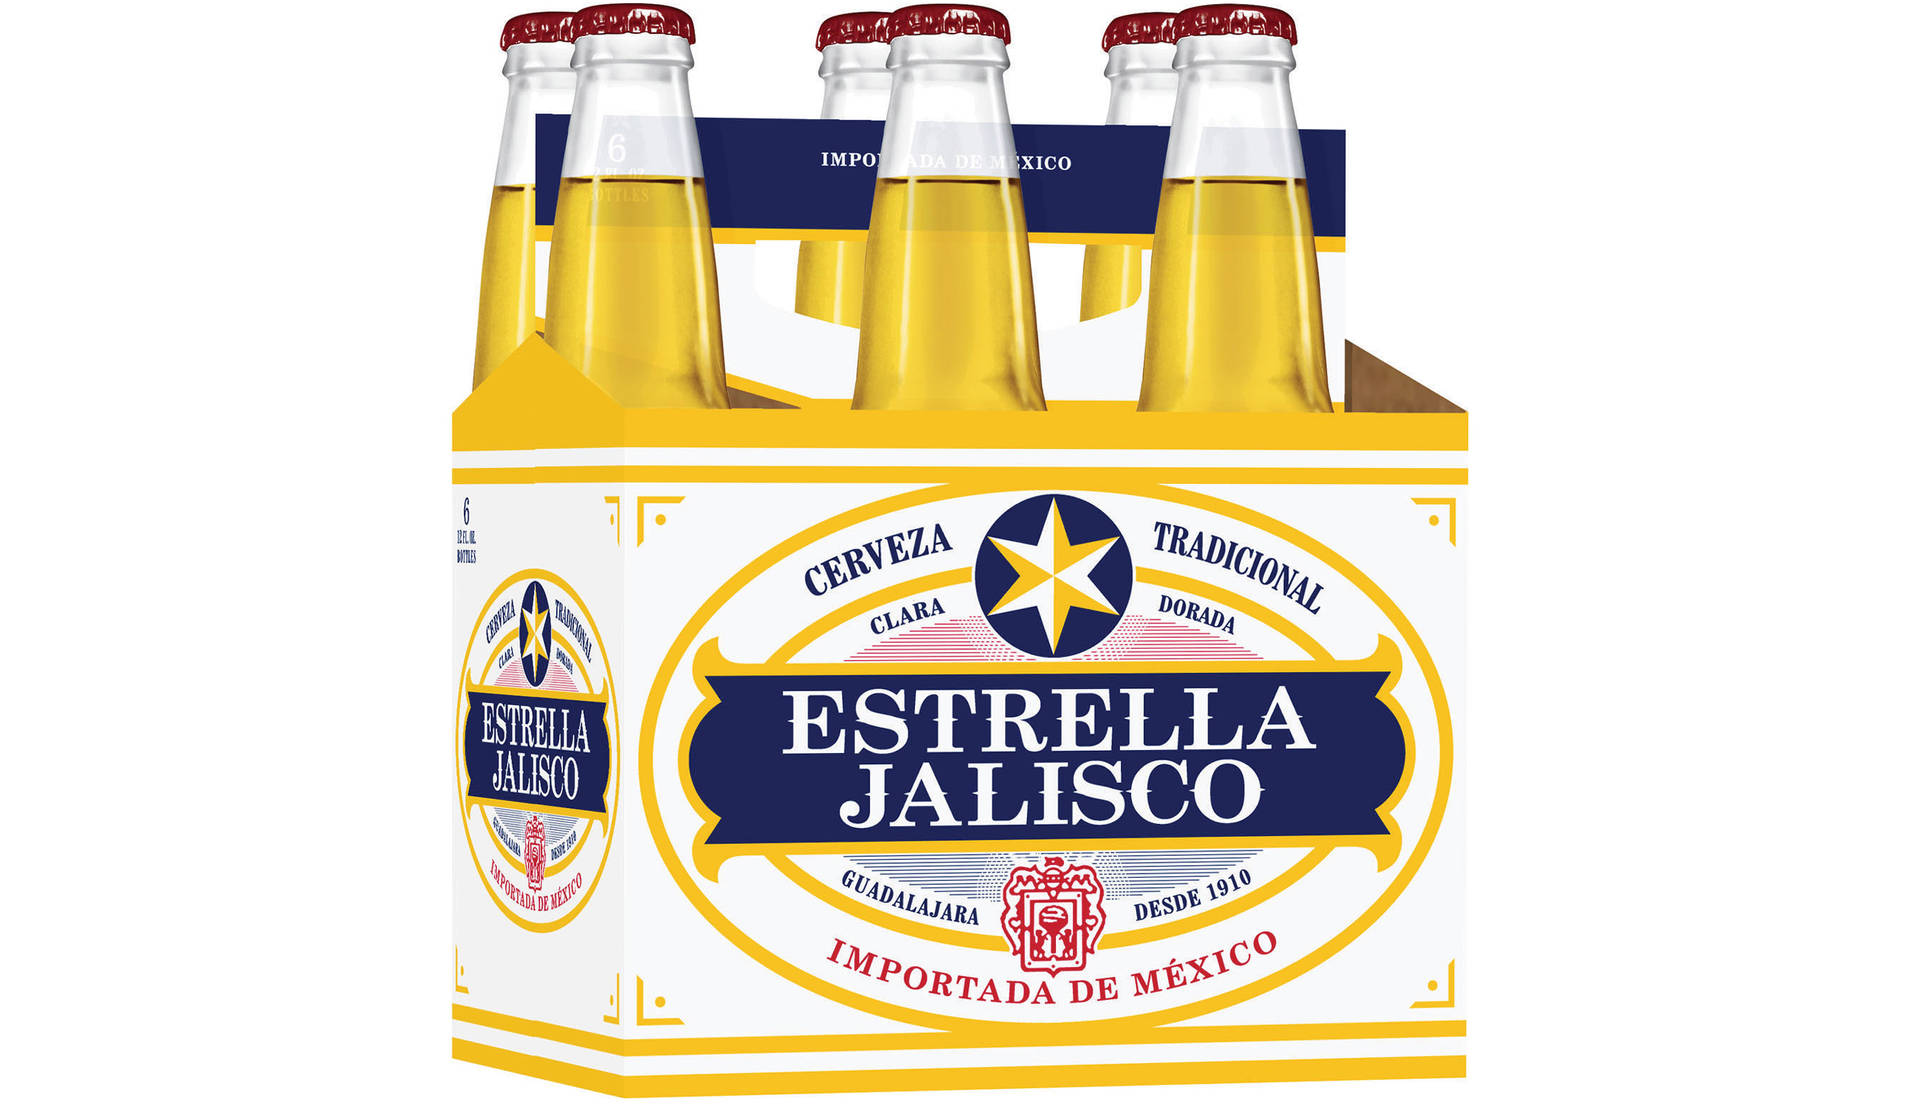 Guldkornöl Estrella Jalisco Pack. Wallpaper